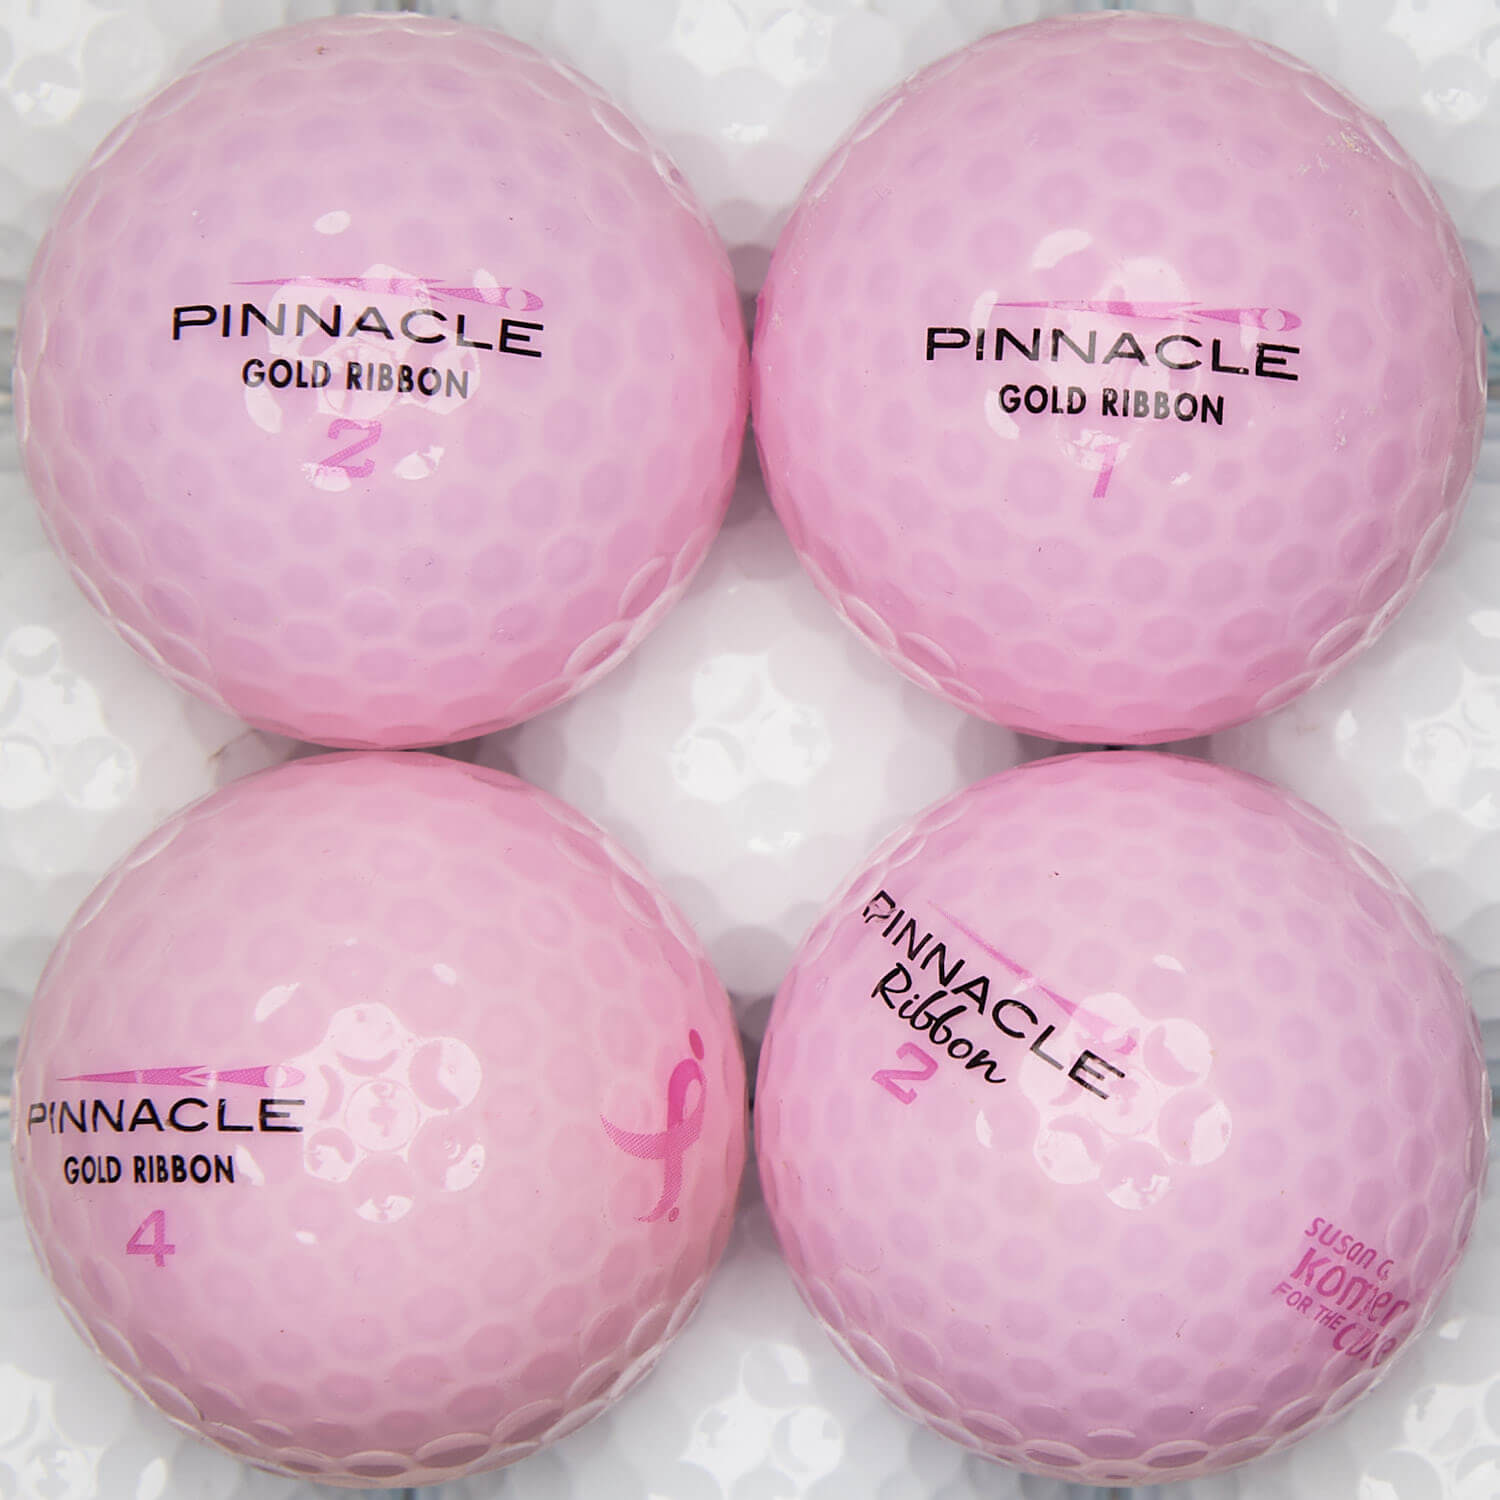 50 Pinnacle Ribbon Lakeballs, pink